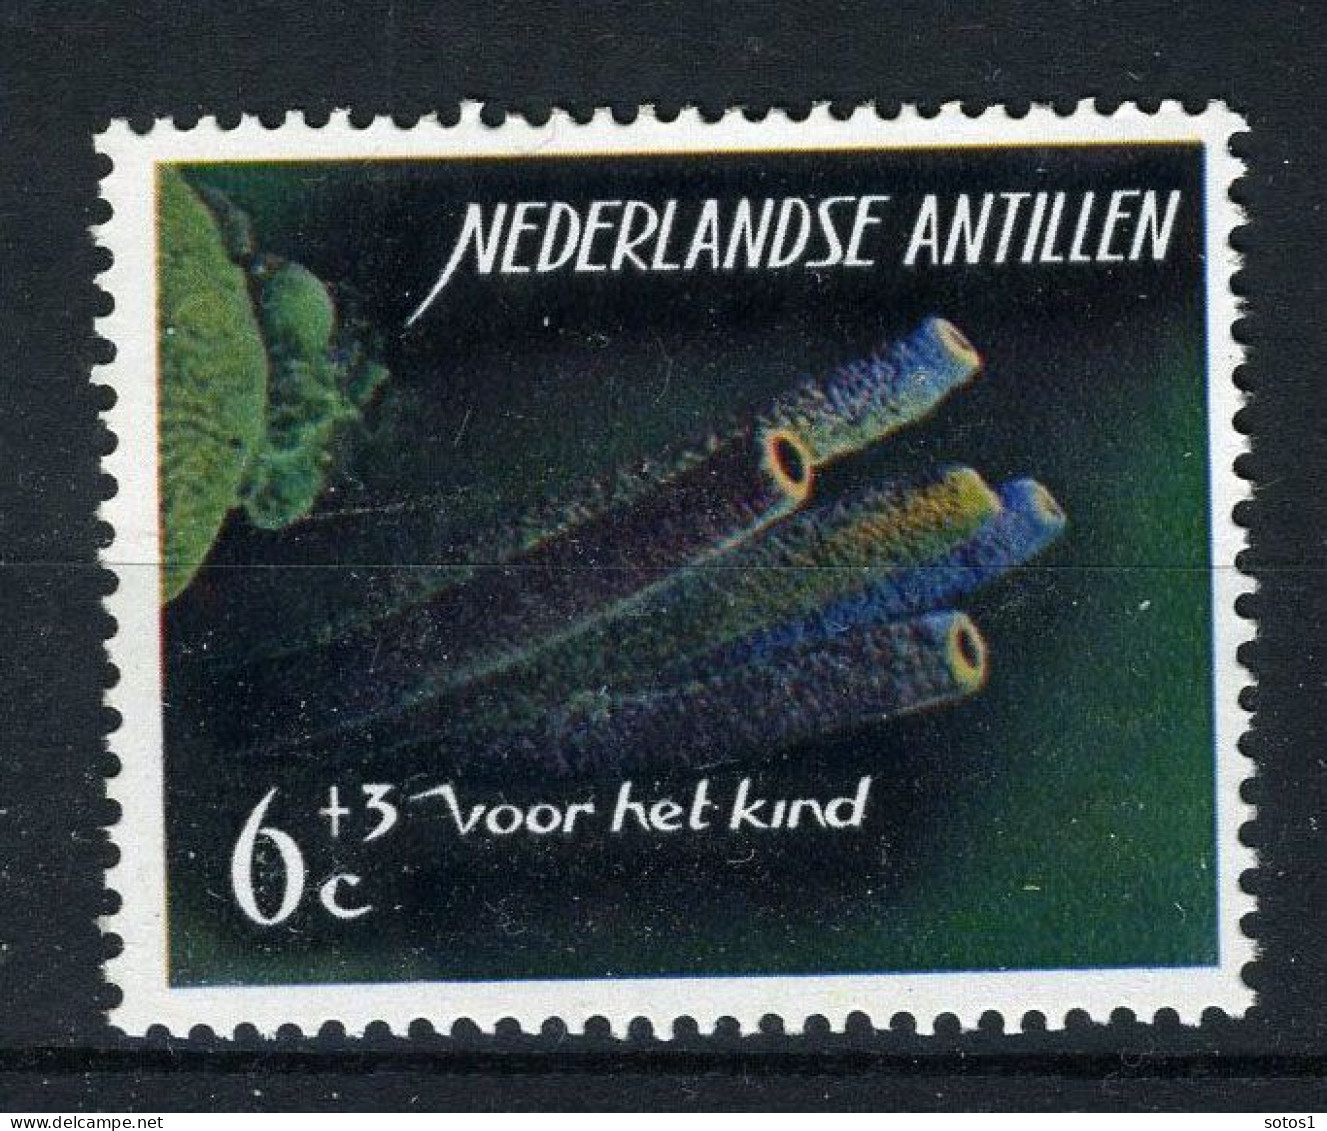 NL. ANTILLEN 364 MNH 1965 - Kinderzegels, Onderwaterleven. - Curacao, Netherlands Antilles, Aruba